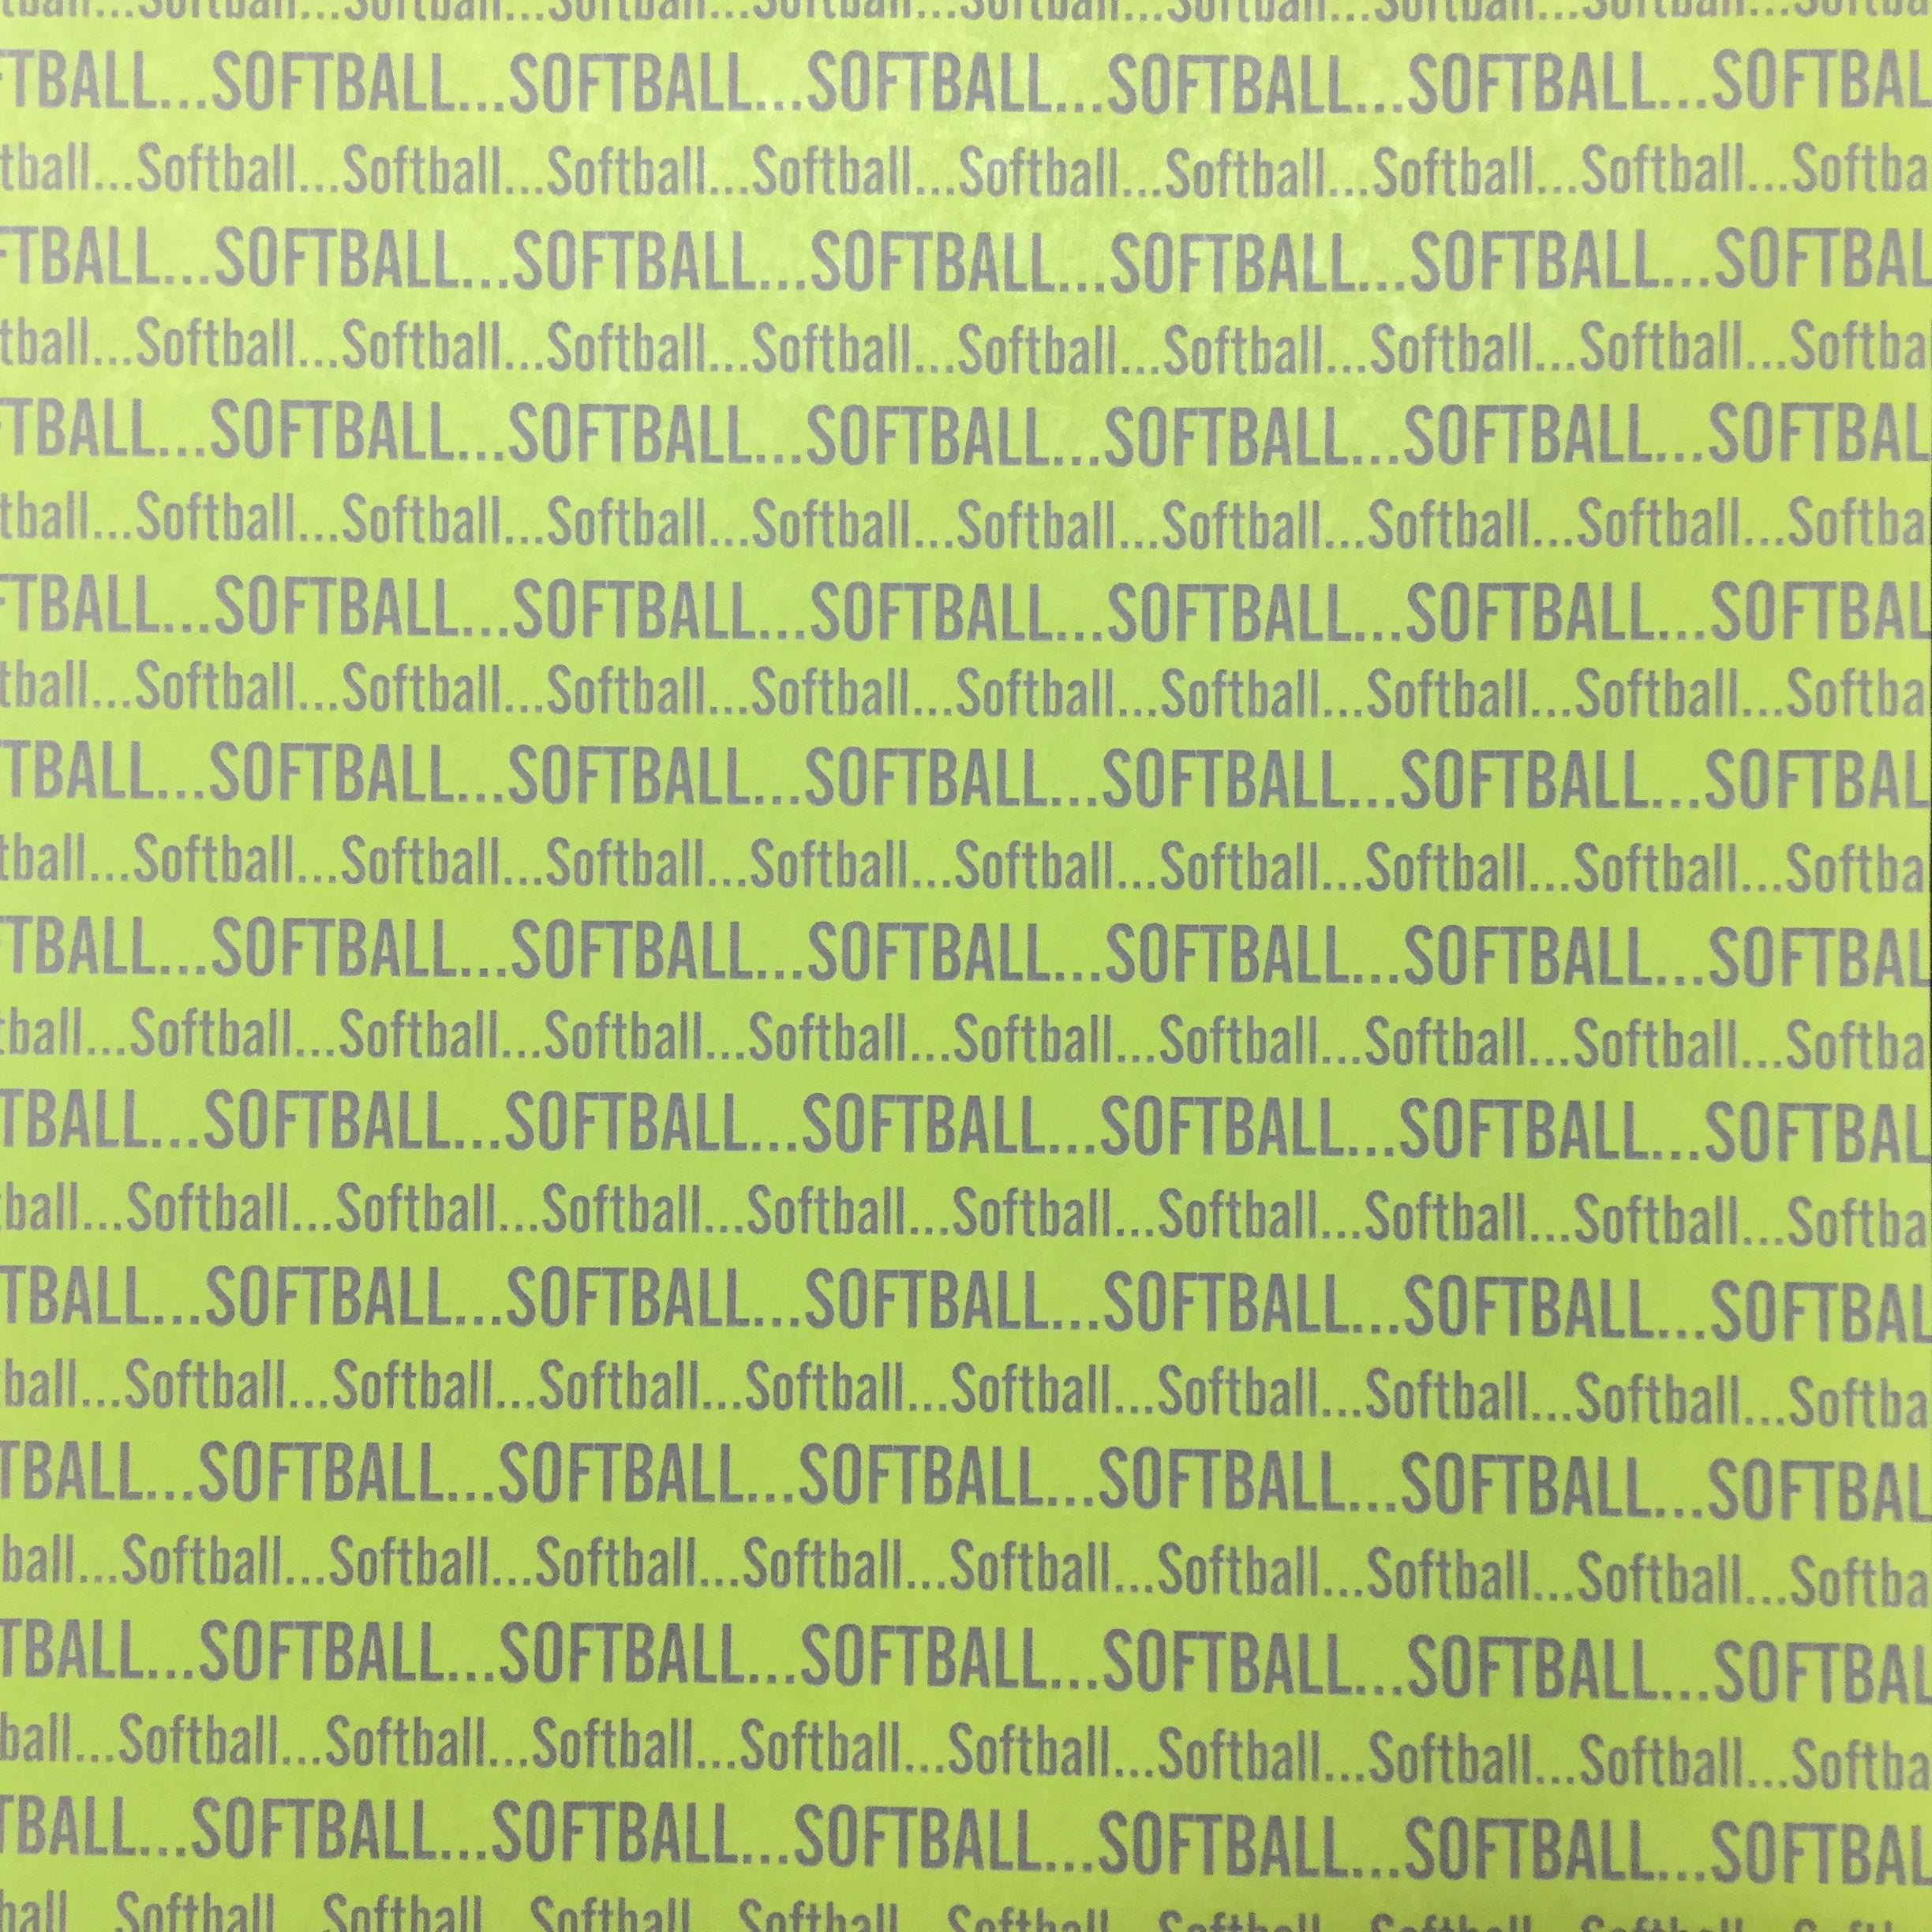 SOFTBALL SPORTS PRIDE 12X12 Sports Sheet Scrapbook Customs Scrapbooksrus 